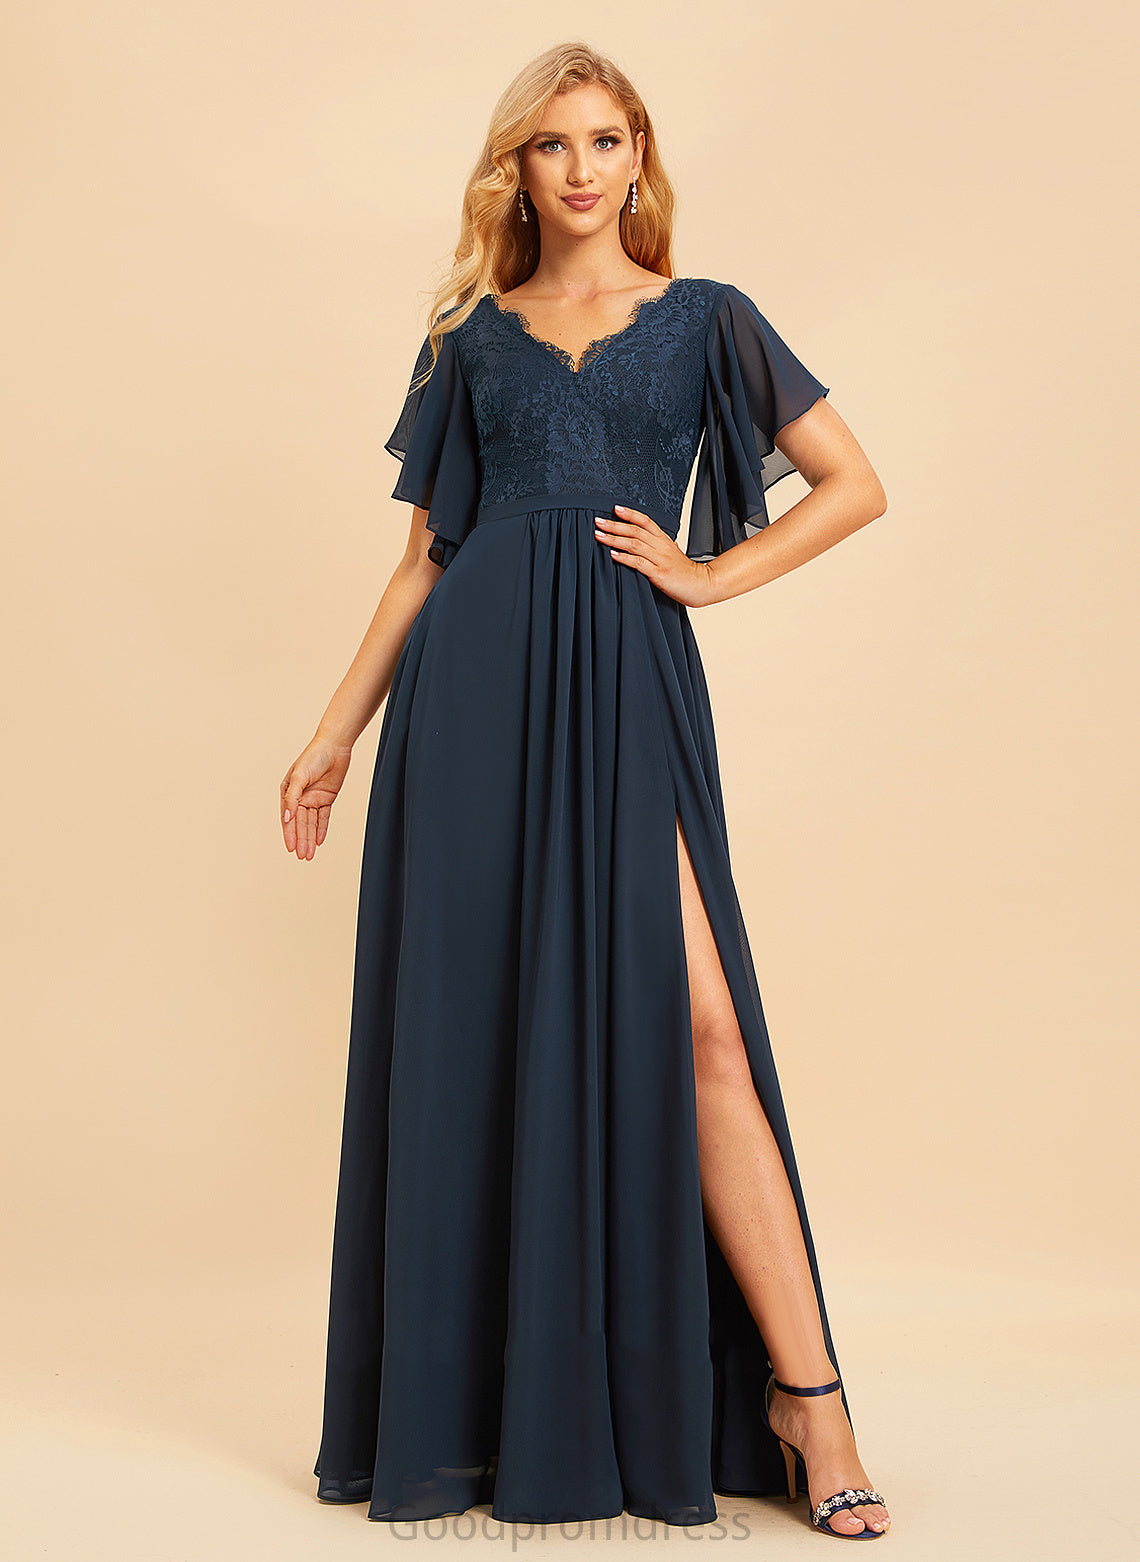 Neckline Fabric Silhouette V-neck Lace Embellishment A-Line Length Floor-Length SplitFront Kaydence Floor Length Bridesmaid Dresses